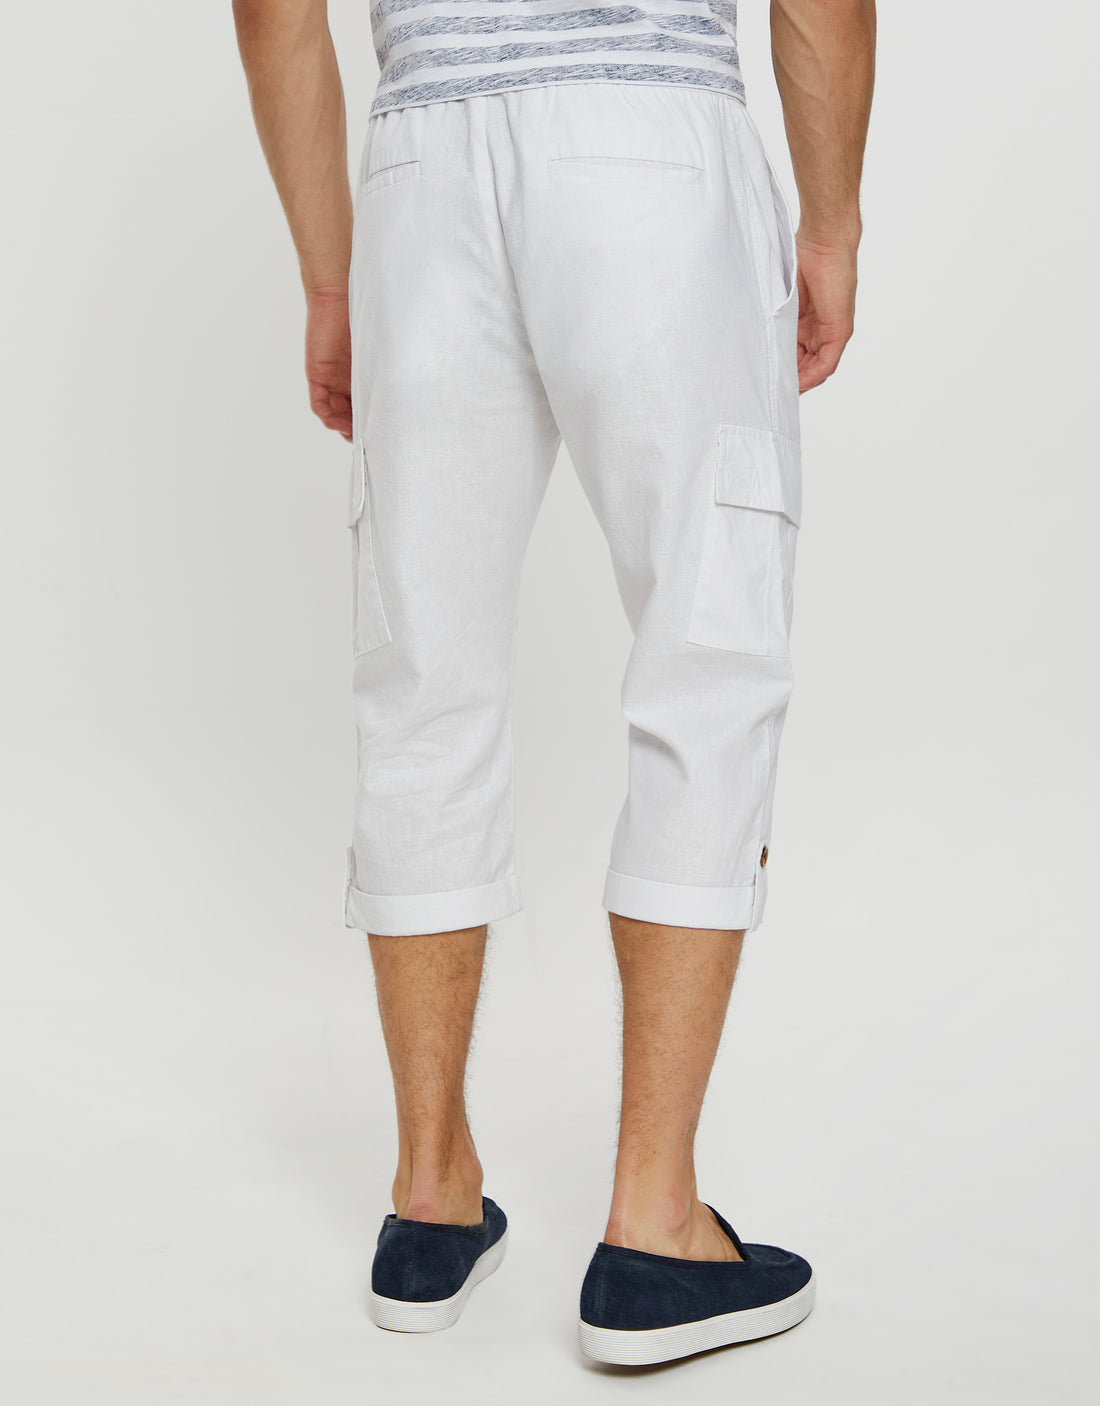 UPDATED Jan - Cargo Three Quarter Pants Male Short Pants, Men's Fashion,  Bottoms, Shorts on Carousell